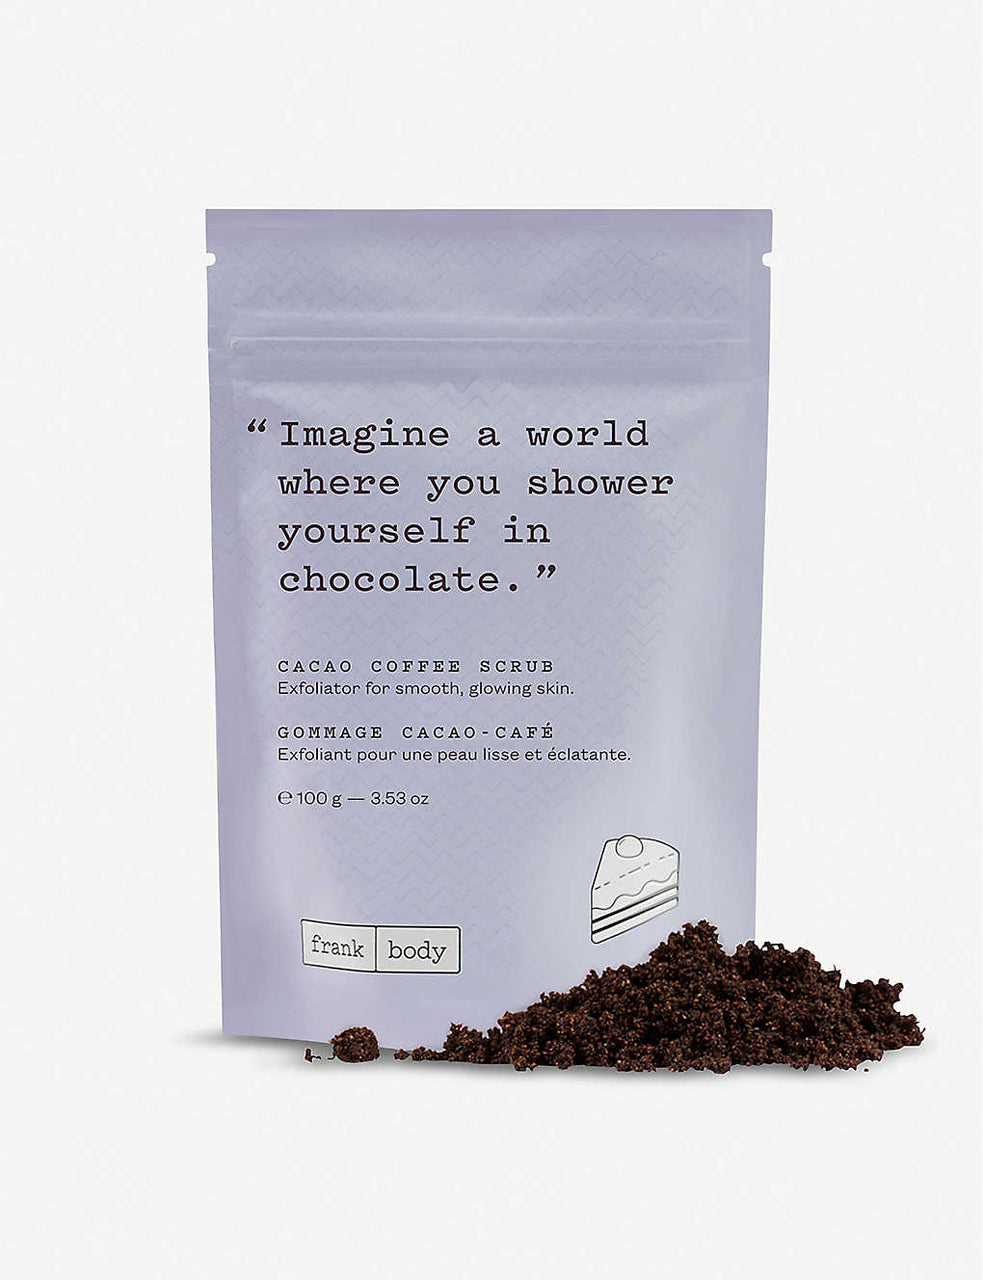 Frank Body - Cacao Coffee Scrub 200g